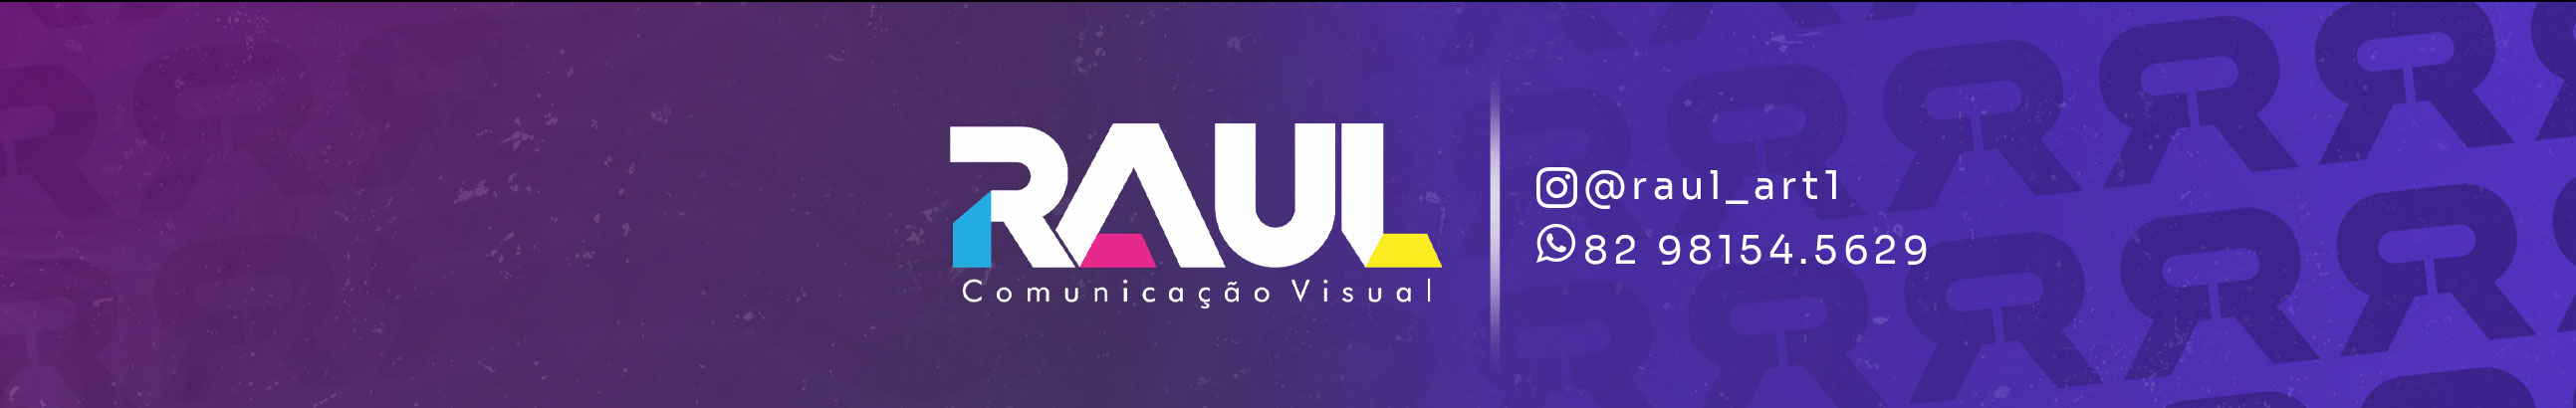 Raul Art's profile banner